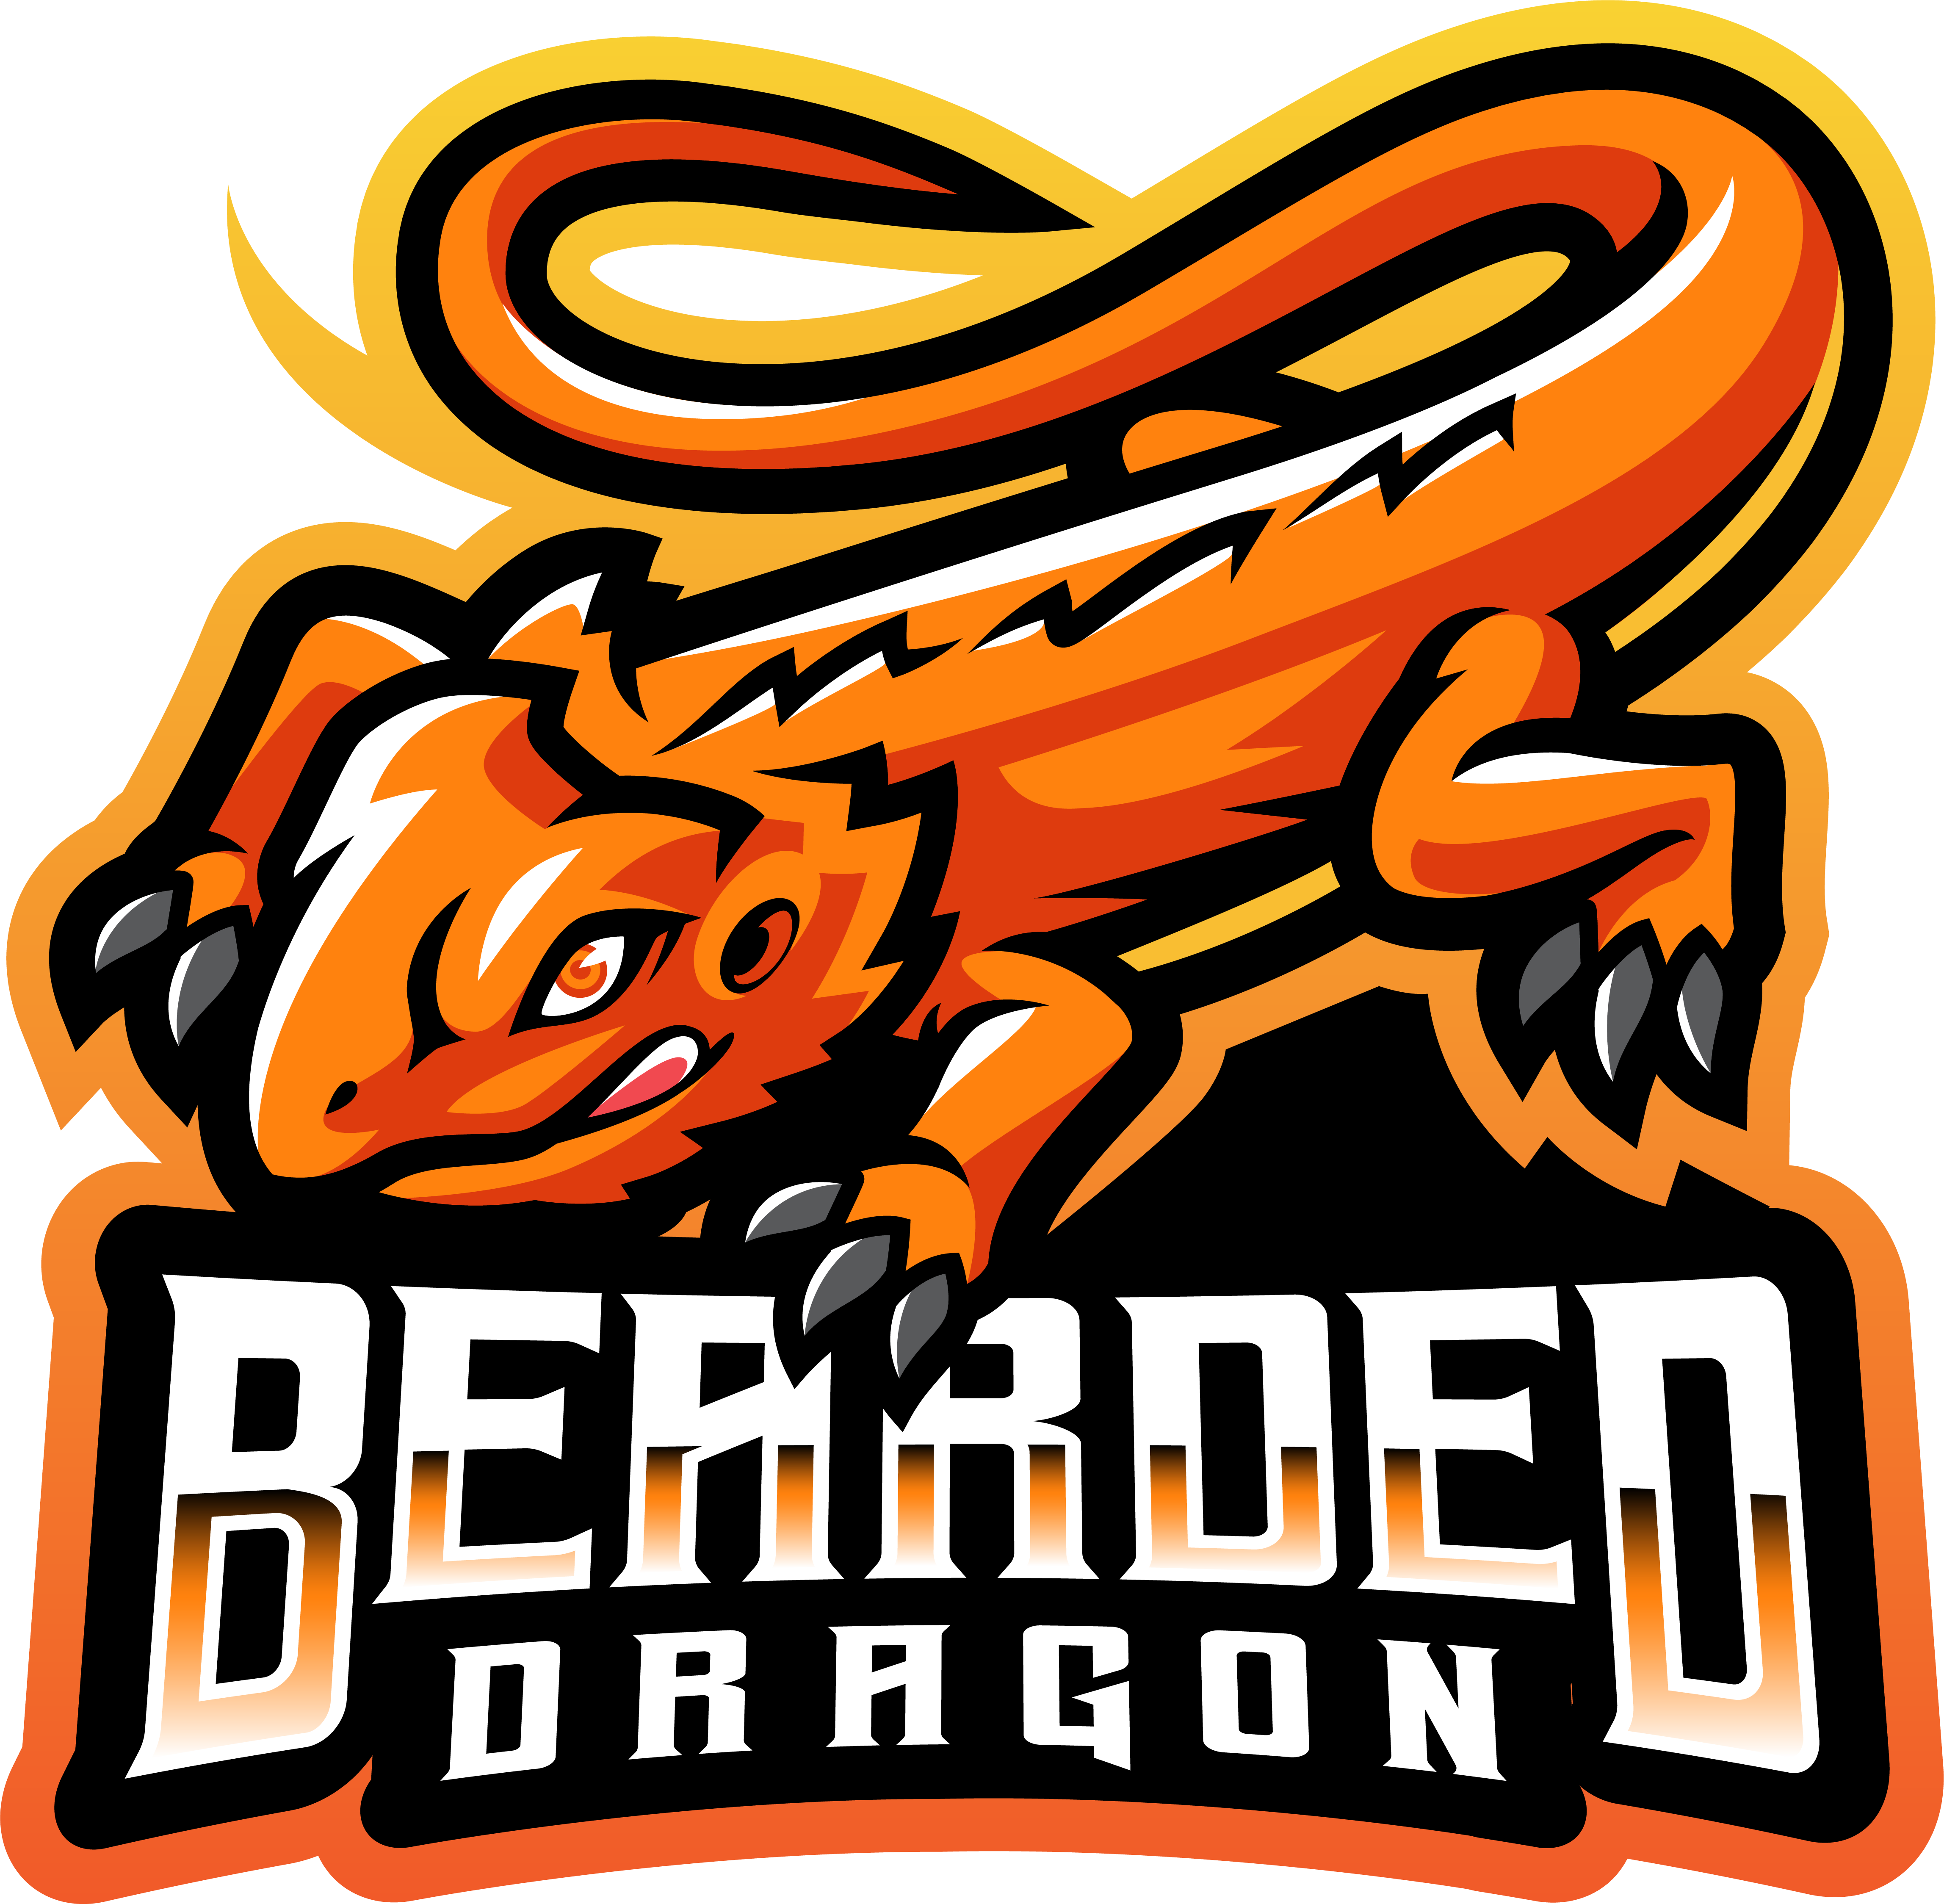 Bearded dragon esport mascot logo By Visink | TheHungryJPEG